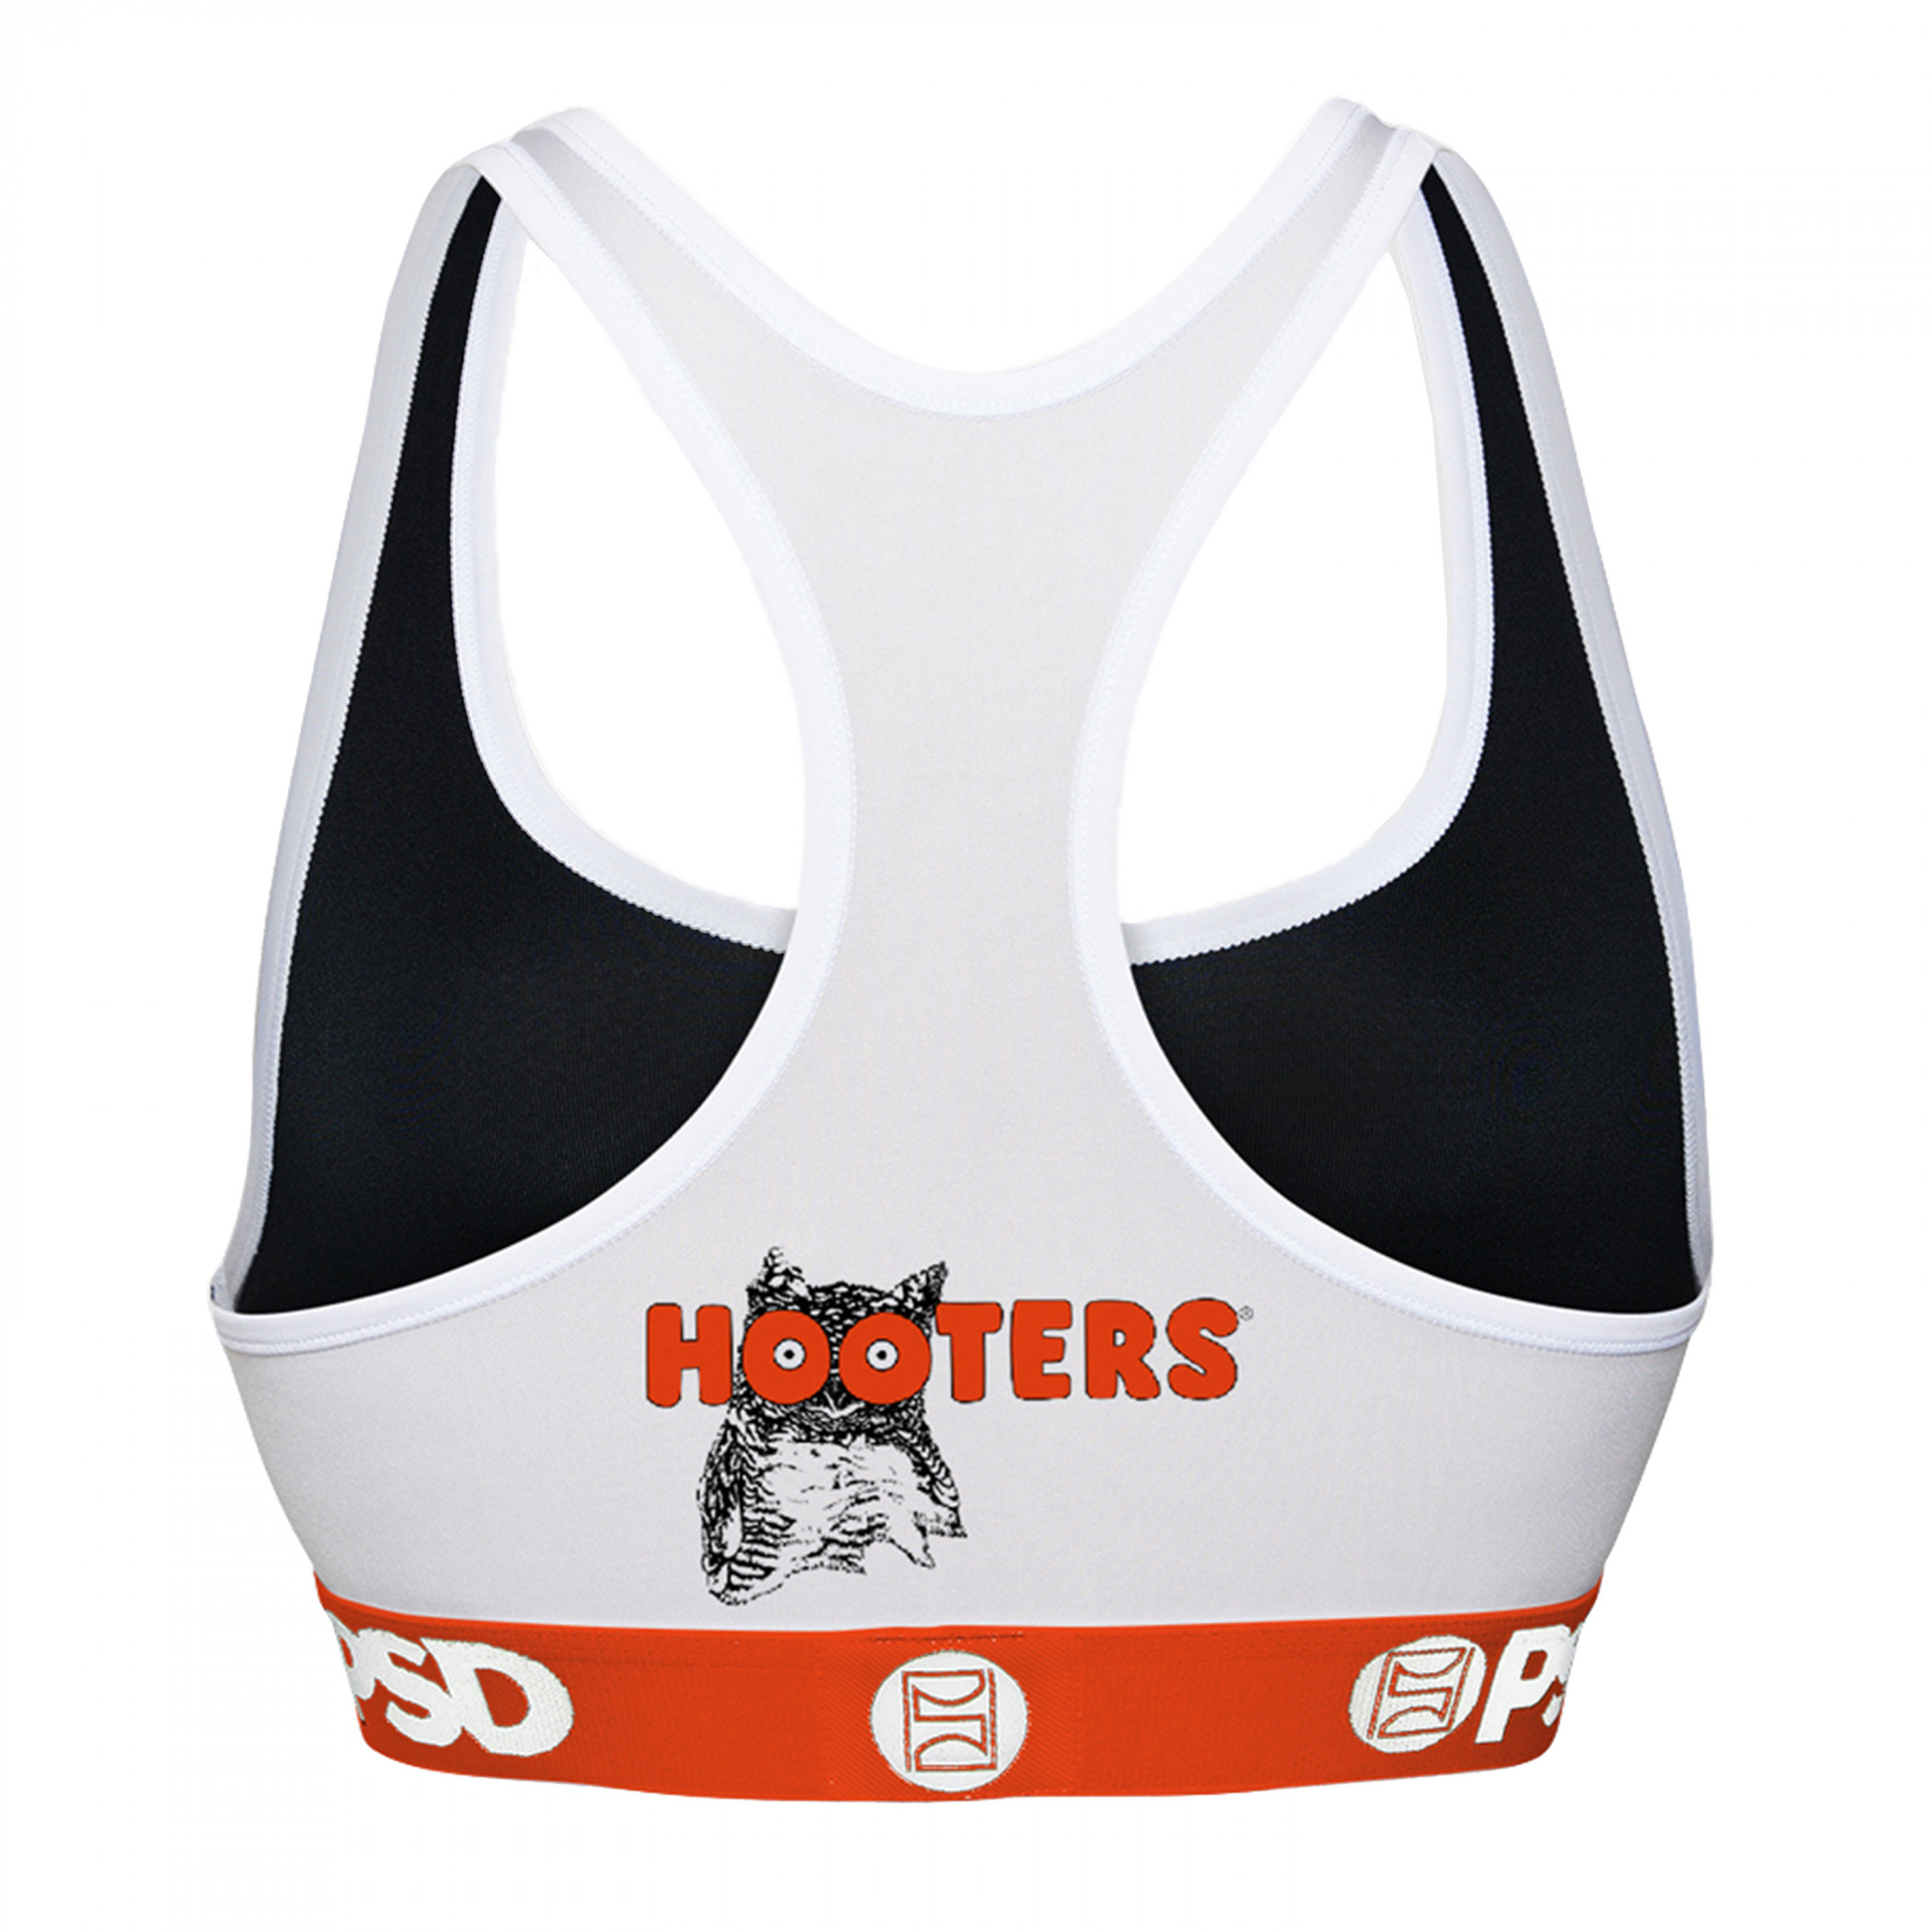 Hooters Restaurant Original Uniform PSD Sports Bra